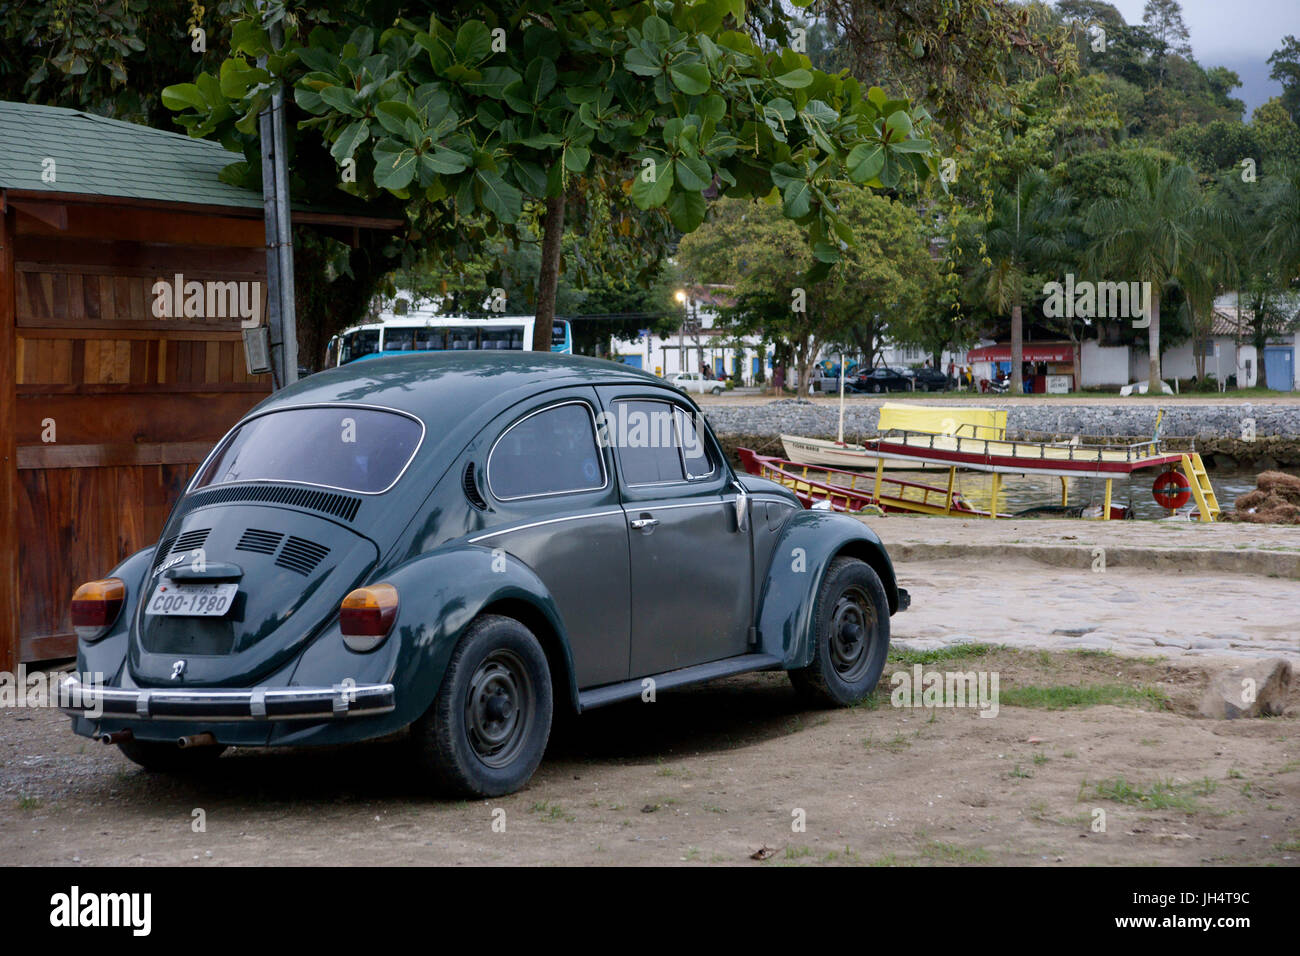 Car, Volkswagen bug, Historical Center, City, Paraty, Brazil Stock Photo